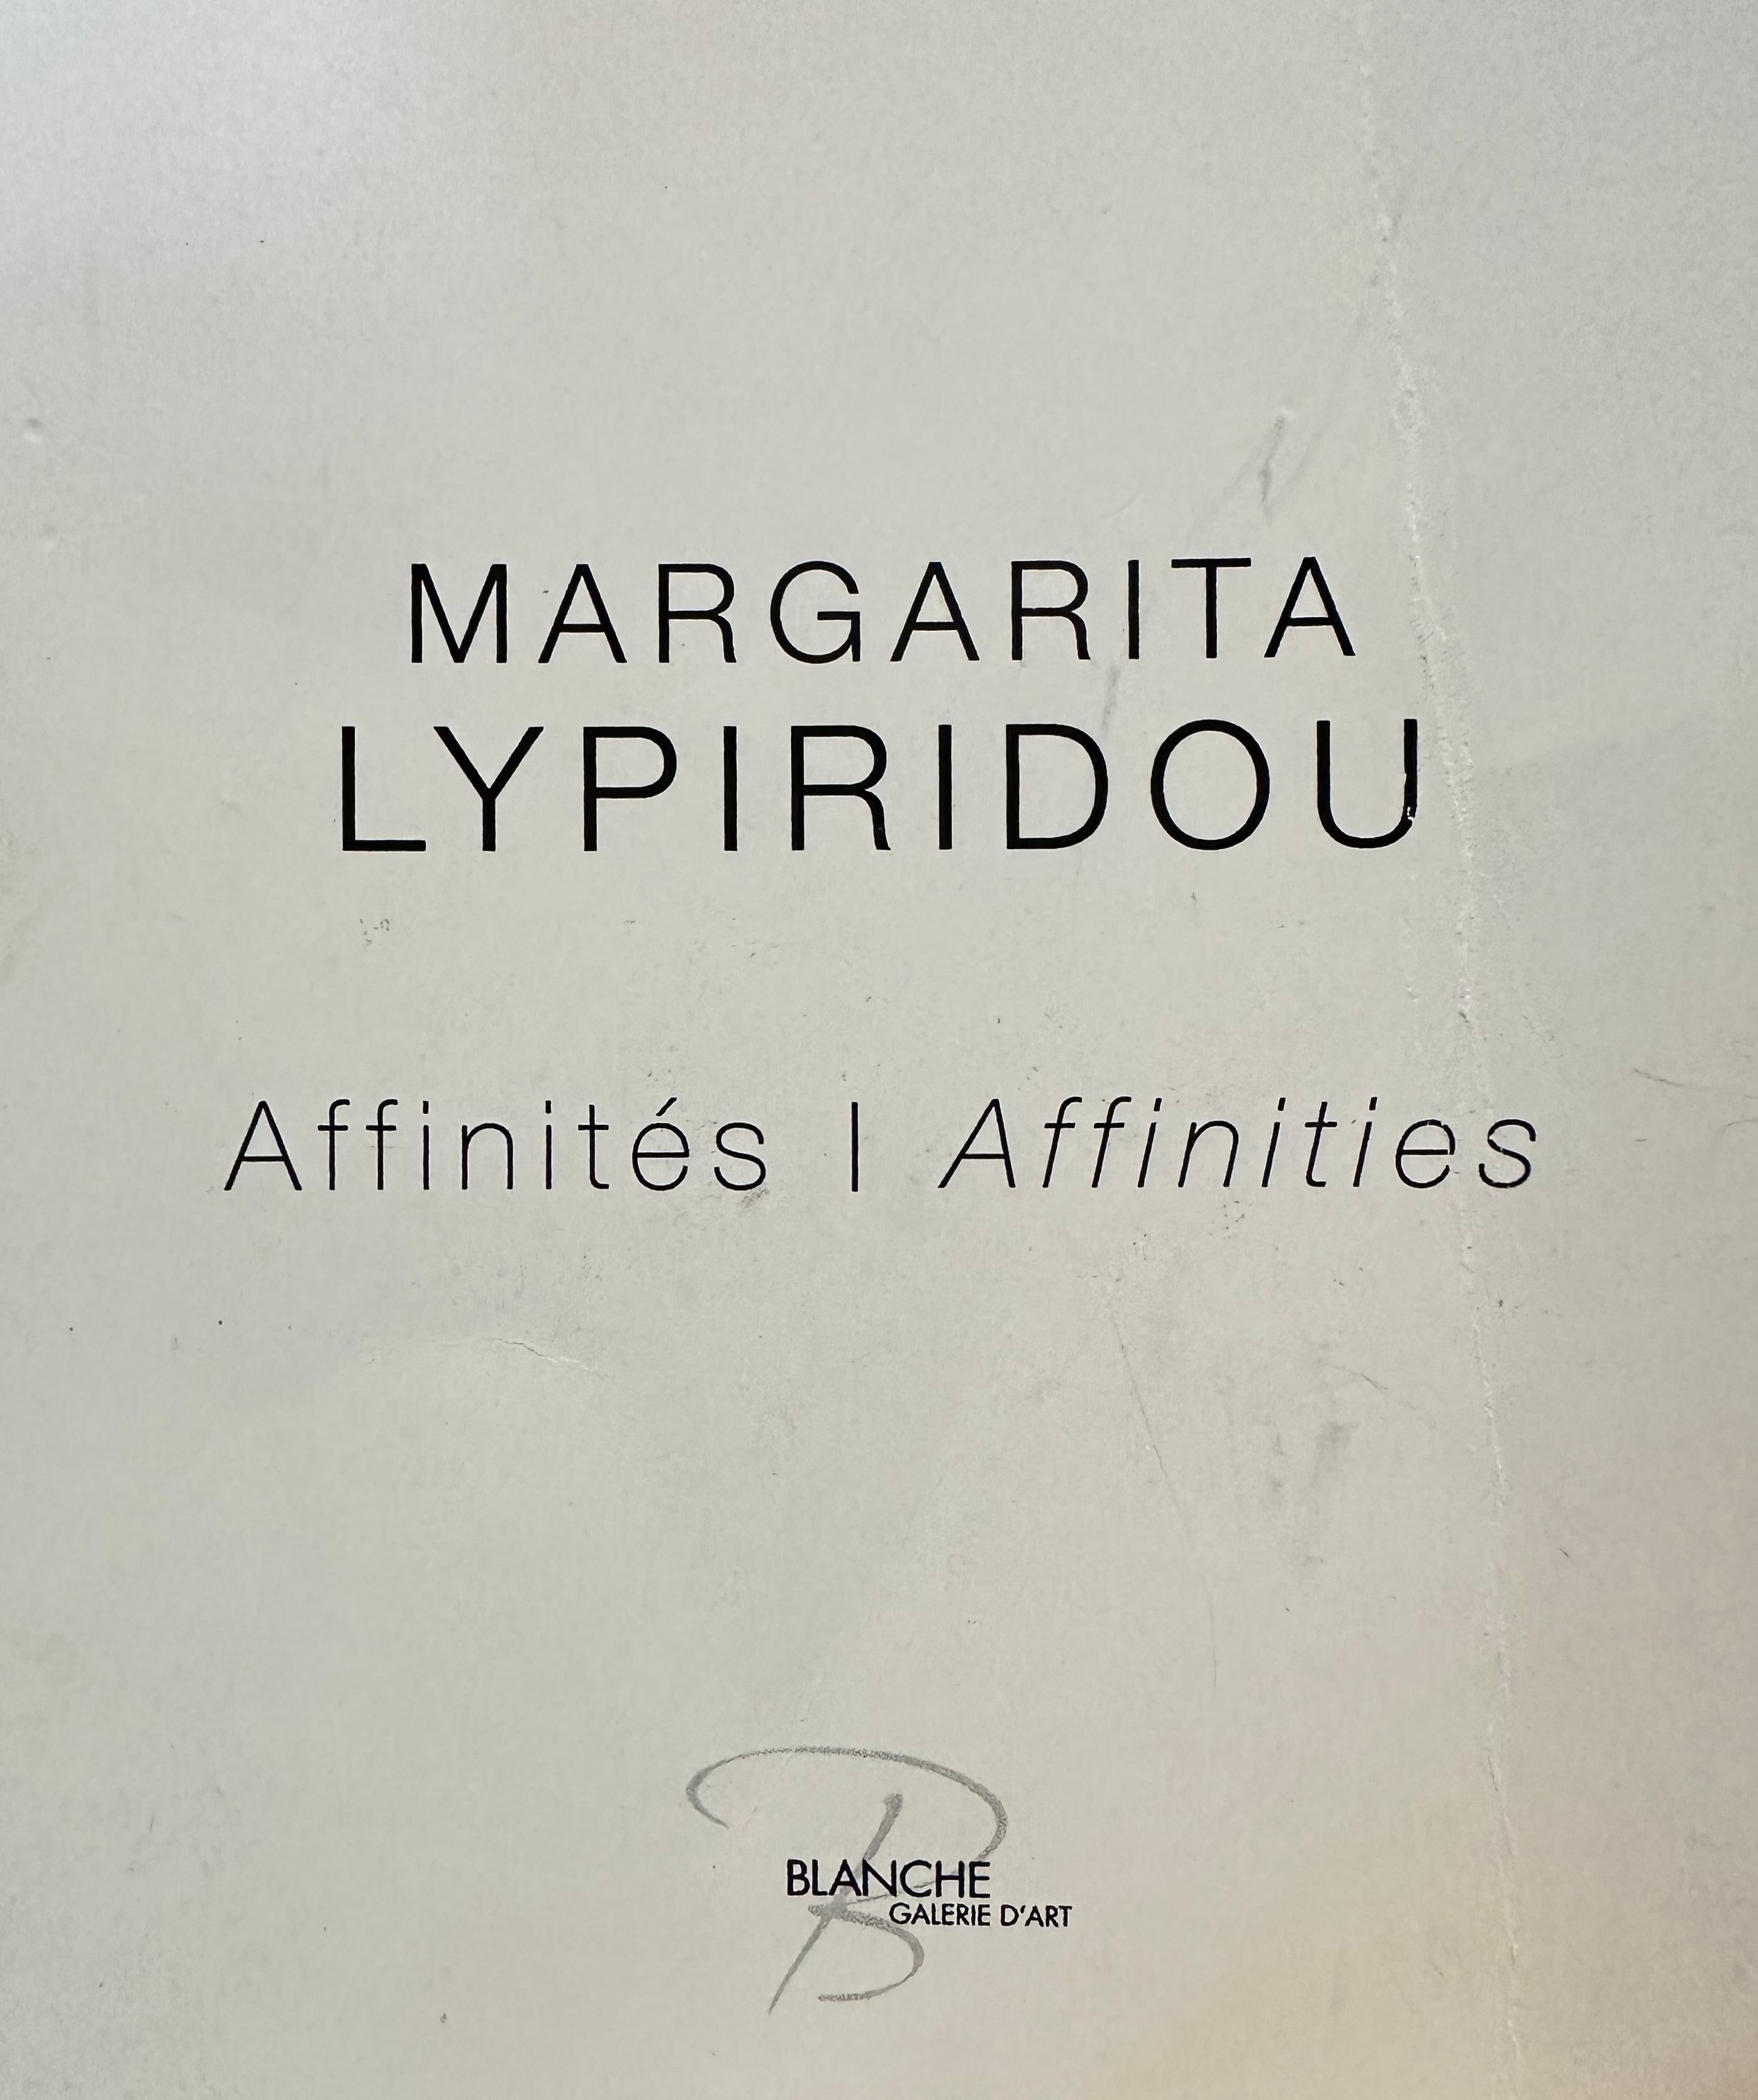 Margarita Lypiridou 2010 Abstract For Sale 7